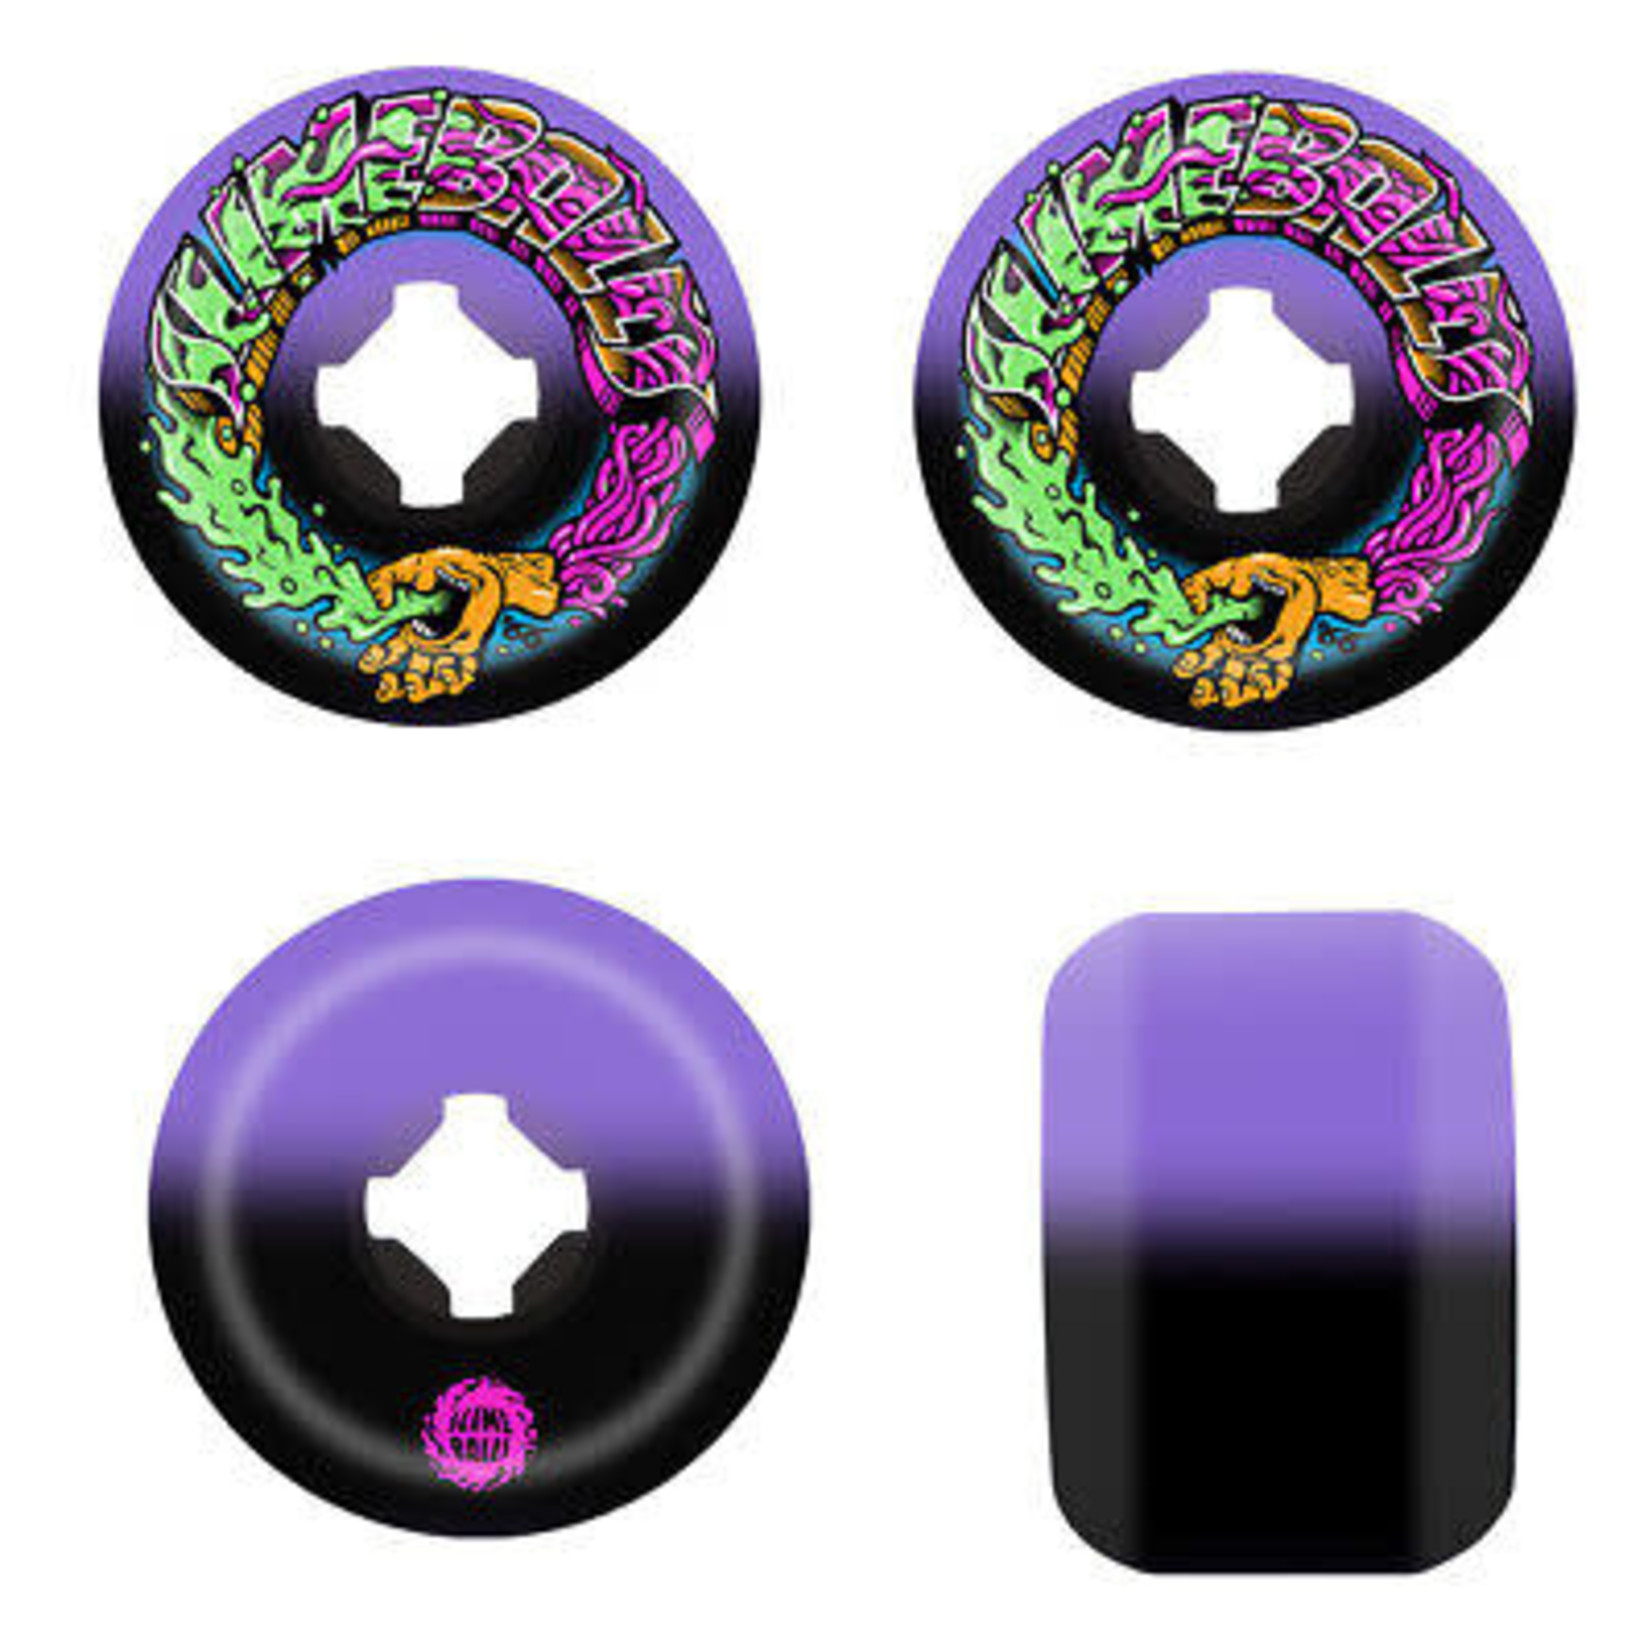 Slimeballs WHEELS GREETINGS SPEED BALLS Purple Black 99A 53mm